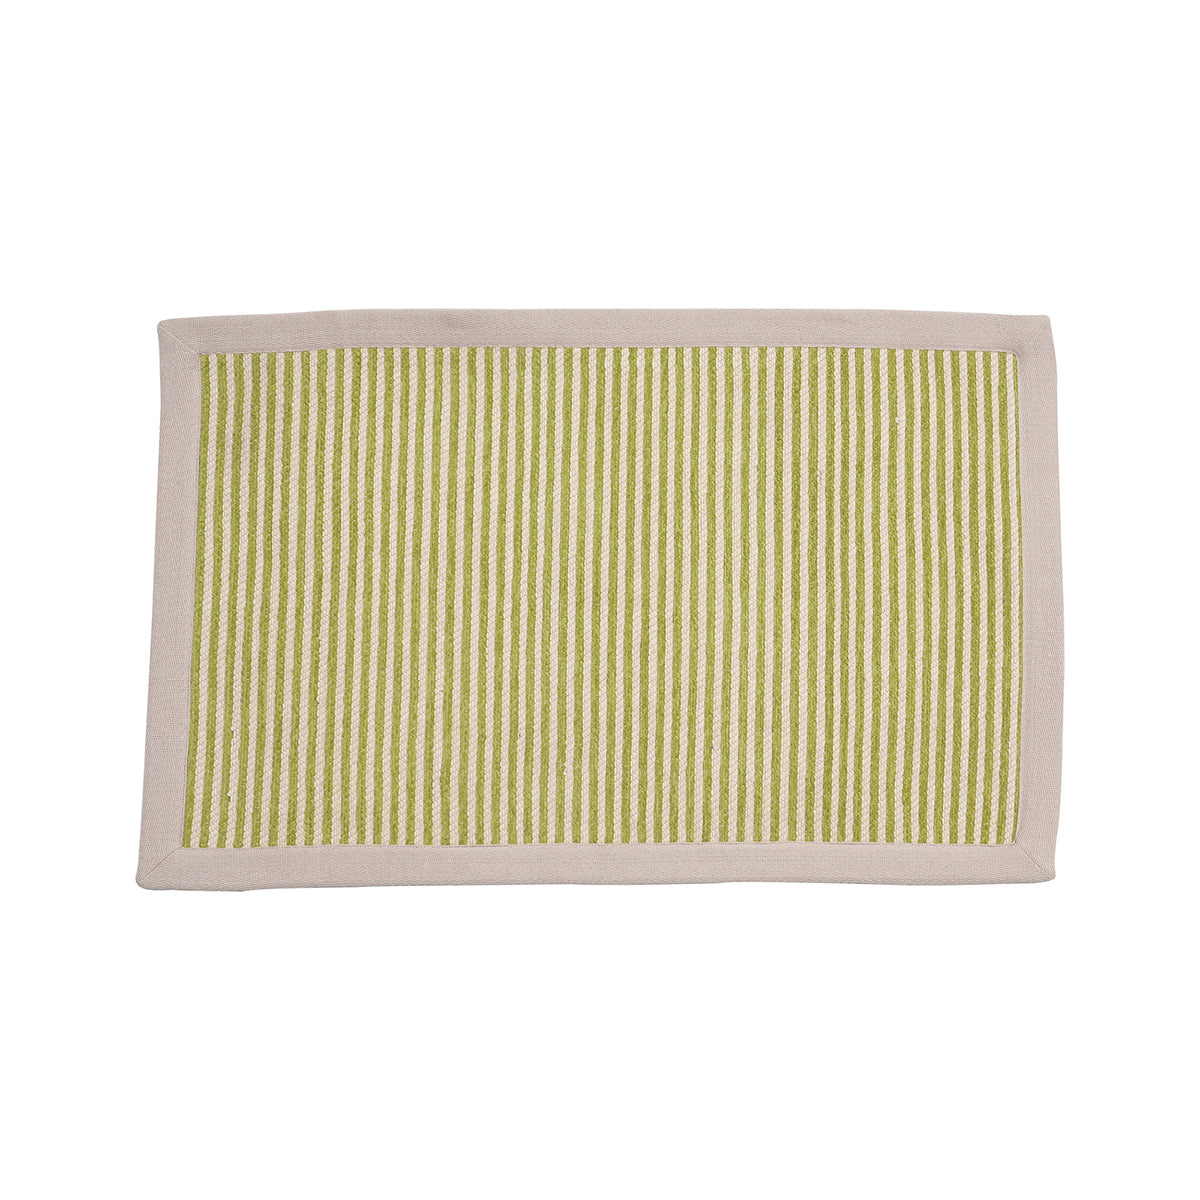 Two Colour Cord Woven 100% Cotton 1PC Doormat